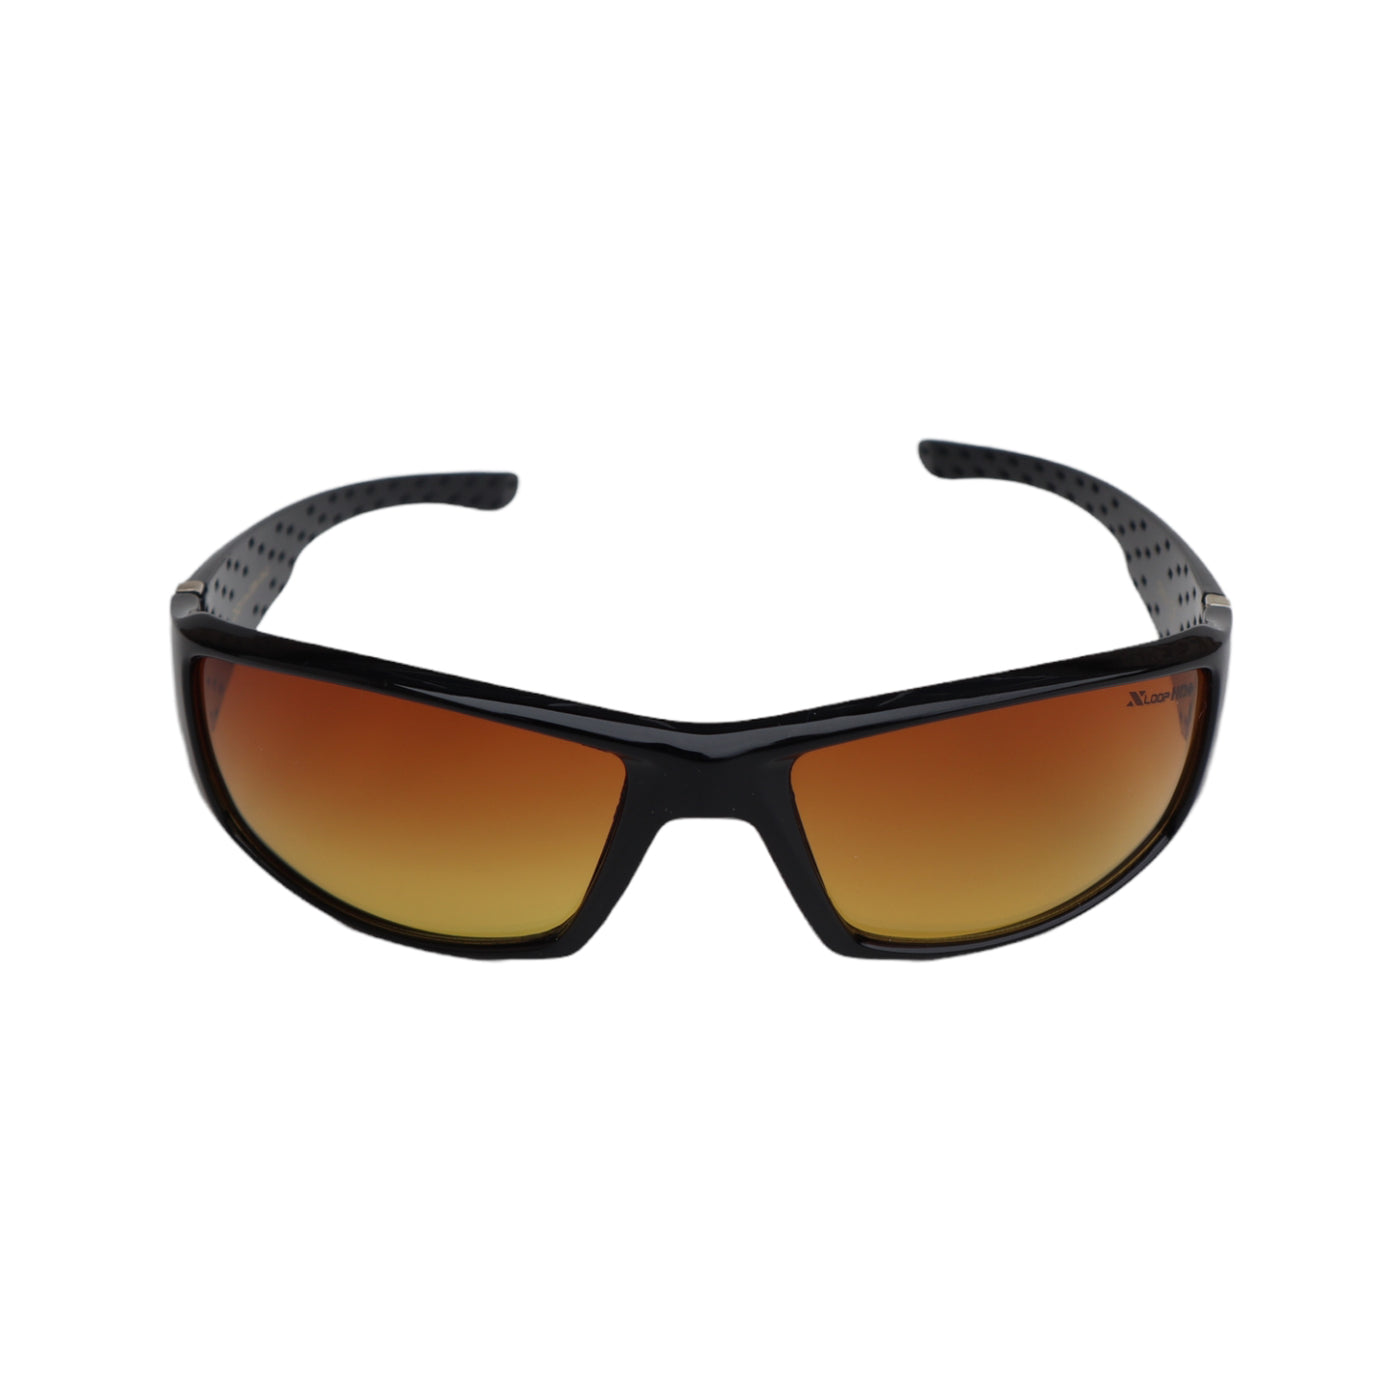 X-LOOP Designer Luxury High Definition Sunglasses Sports Frames BROWN lens